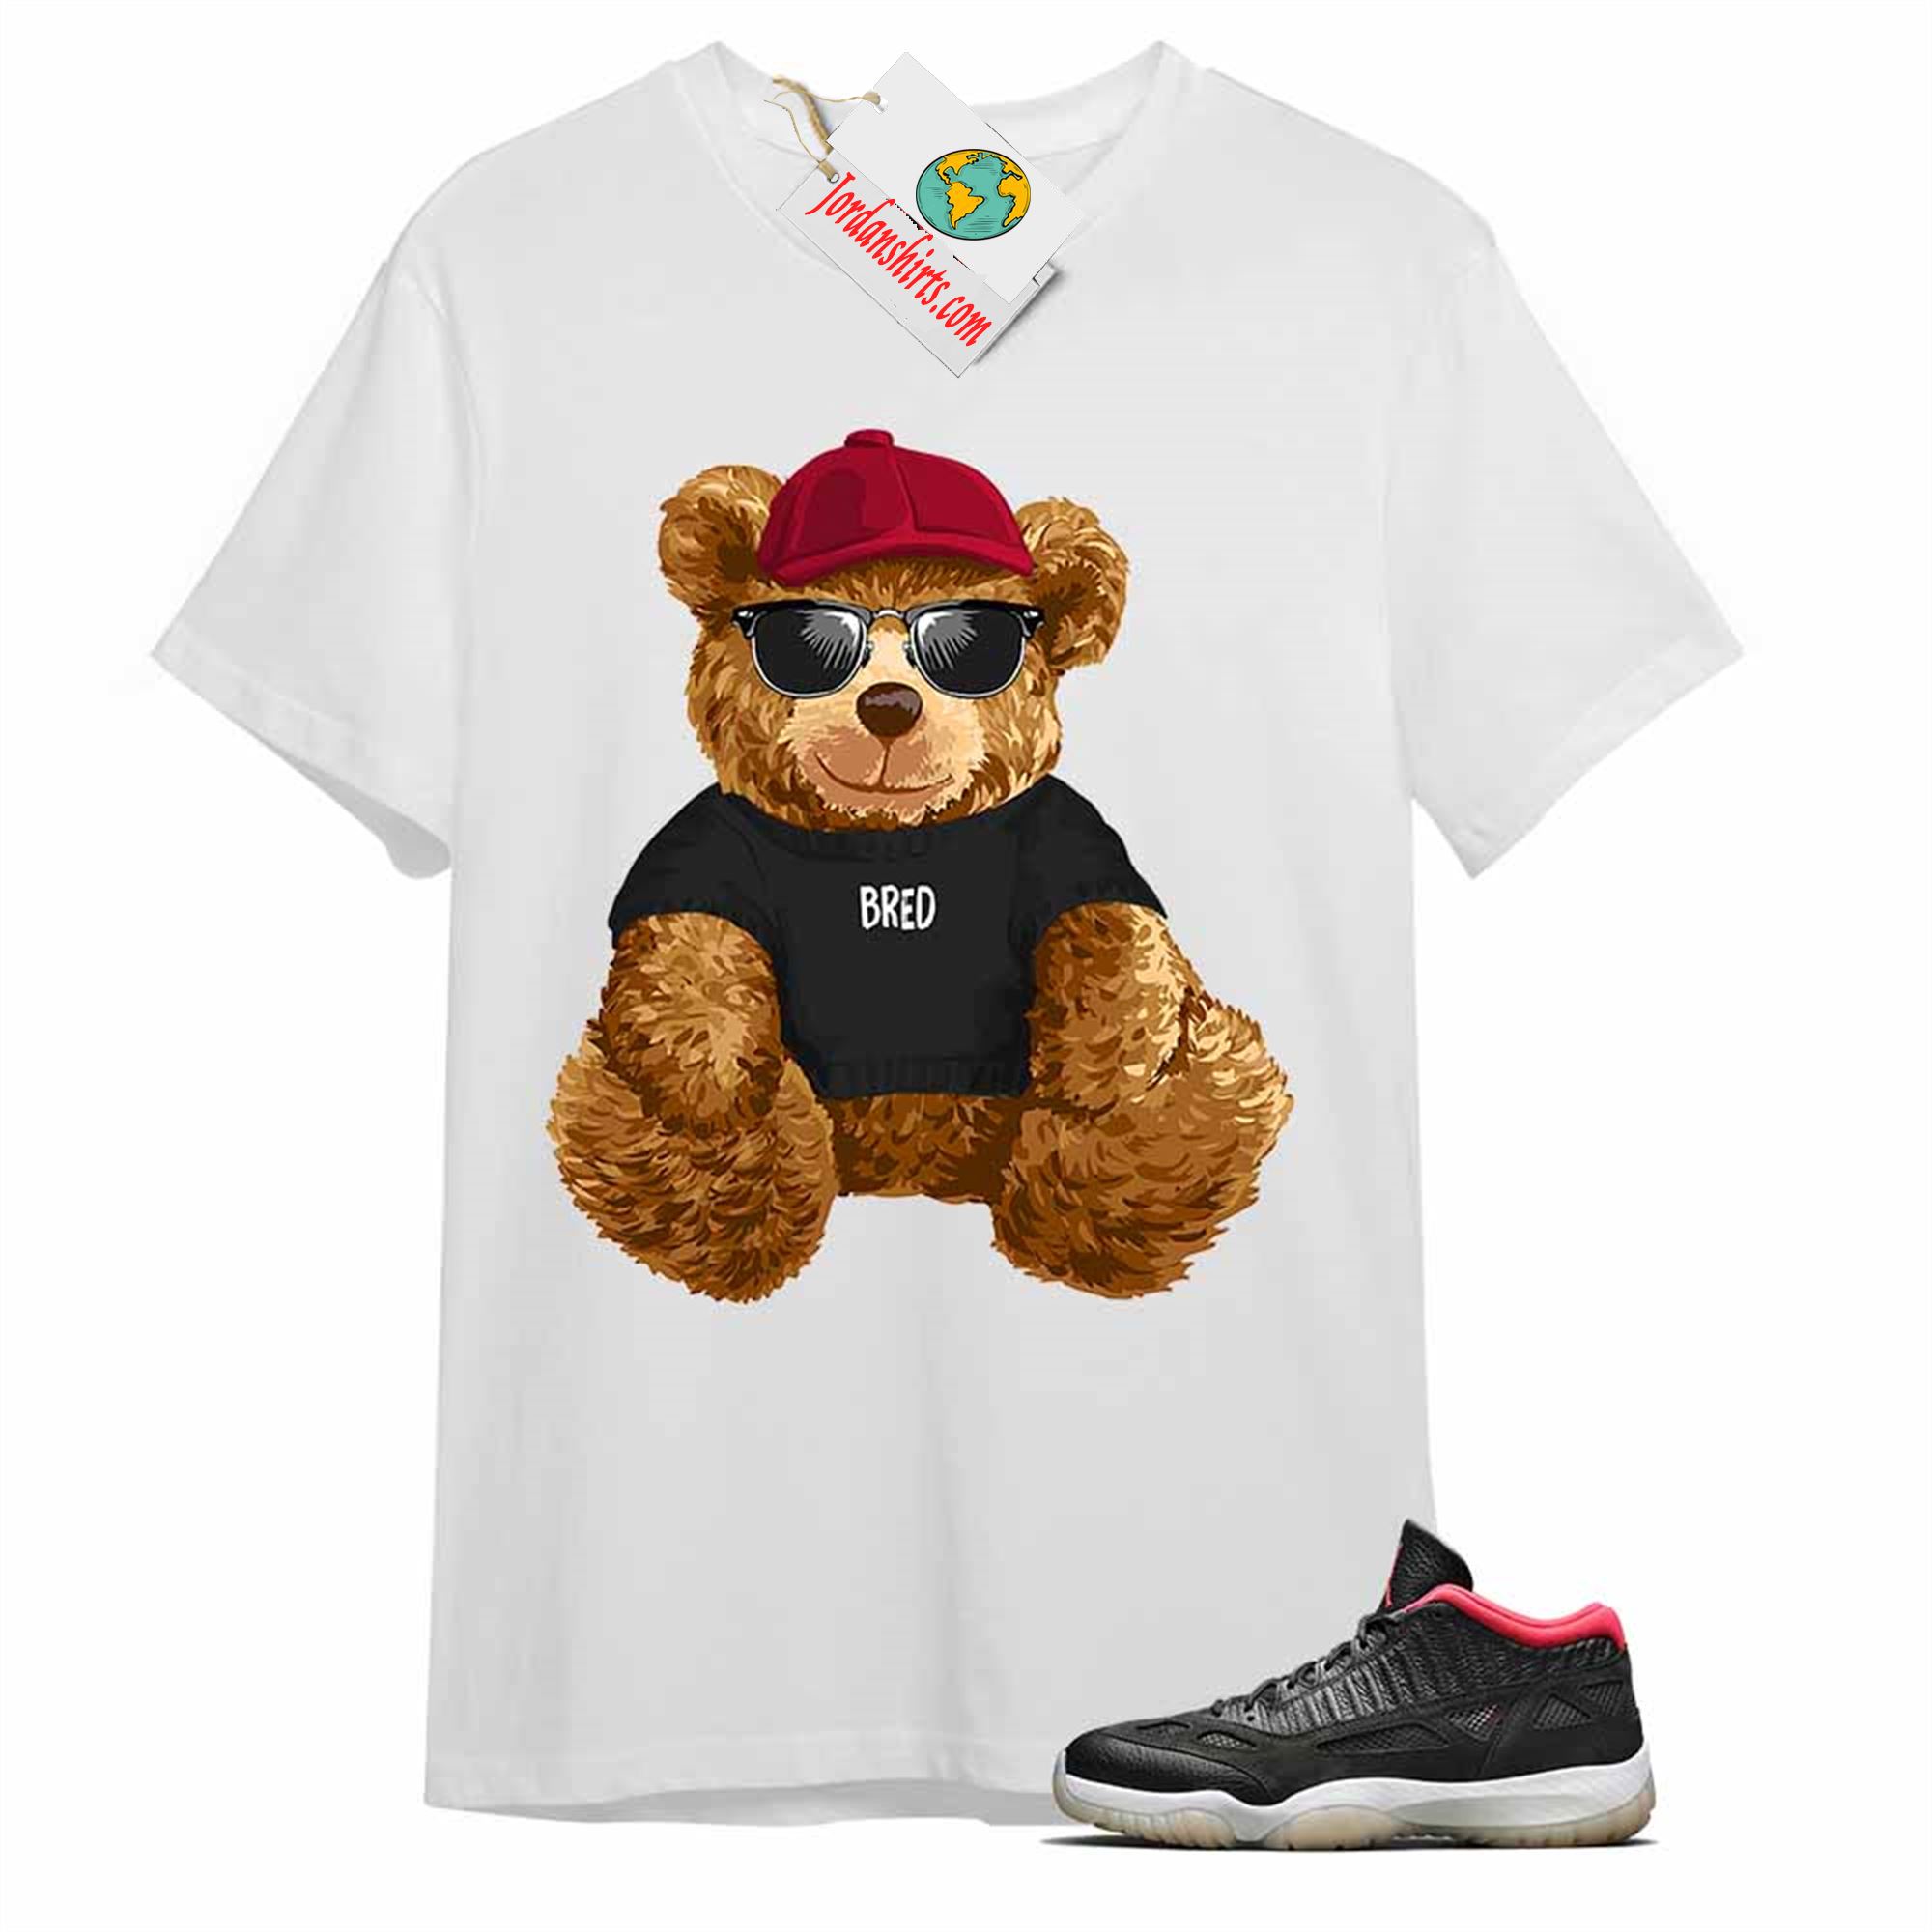 Jordan 11 Shirt, Teddy Bear With Sunglasses _hat White T-shirt Air Jordan 11 Bred 11s Plus Size Up To 5xl